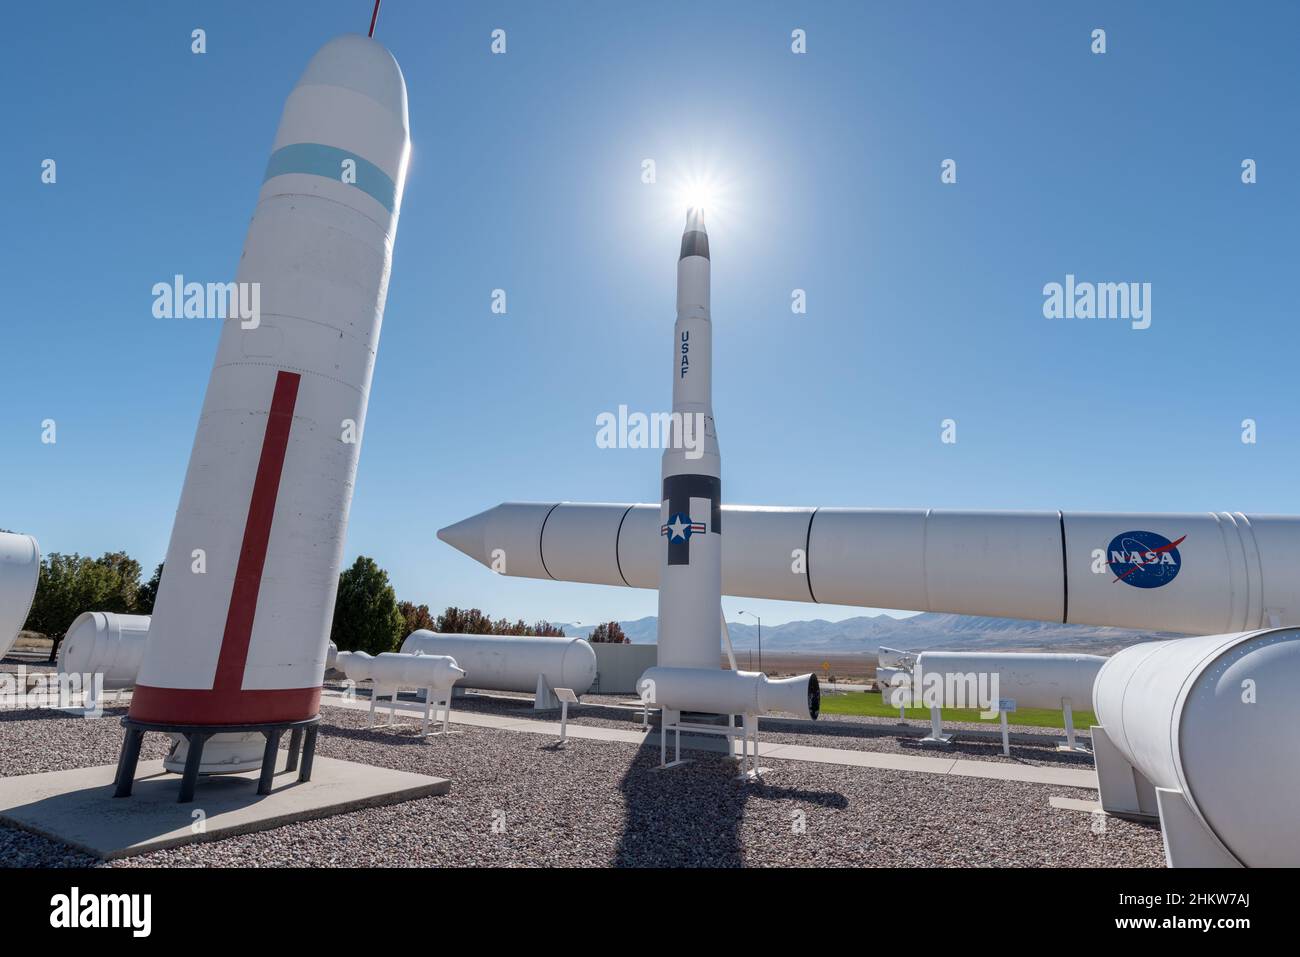 Rockets on display at the Northrop Grumman Rocket Garden, Corrine, Utah. Stock Photo